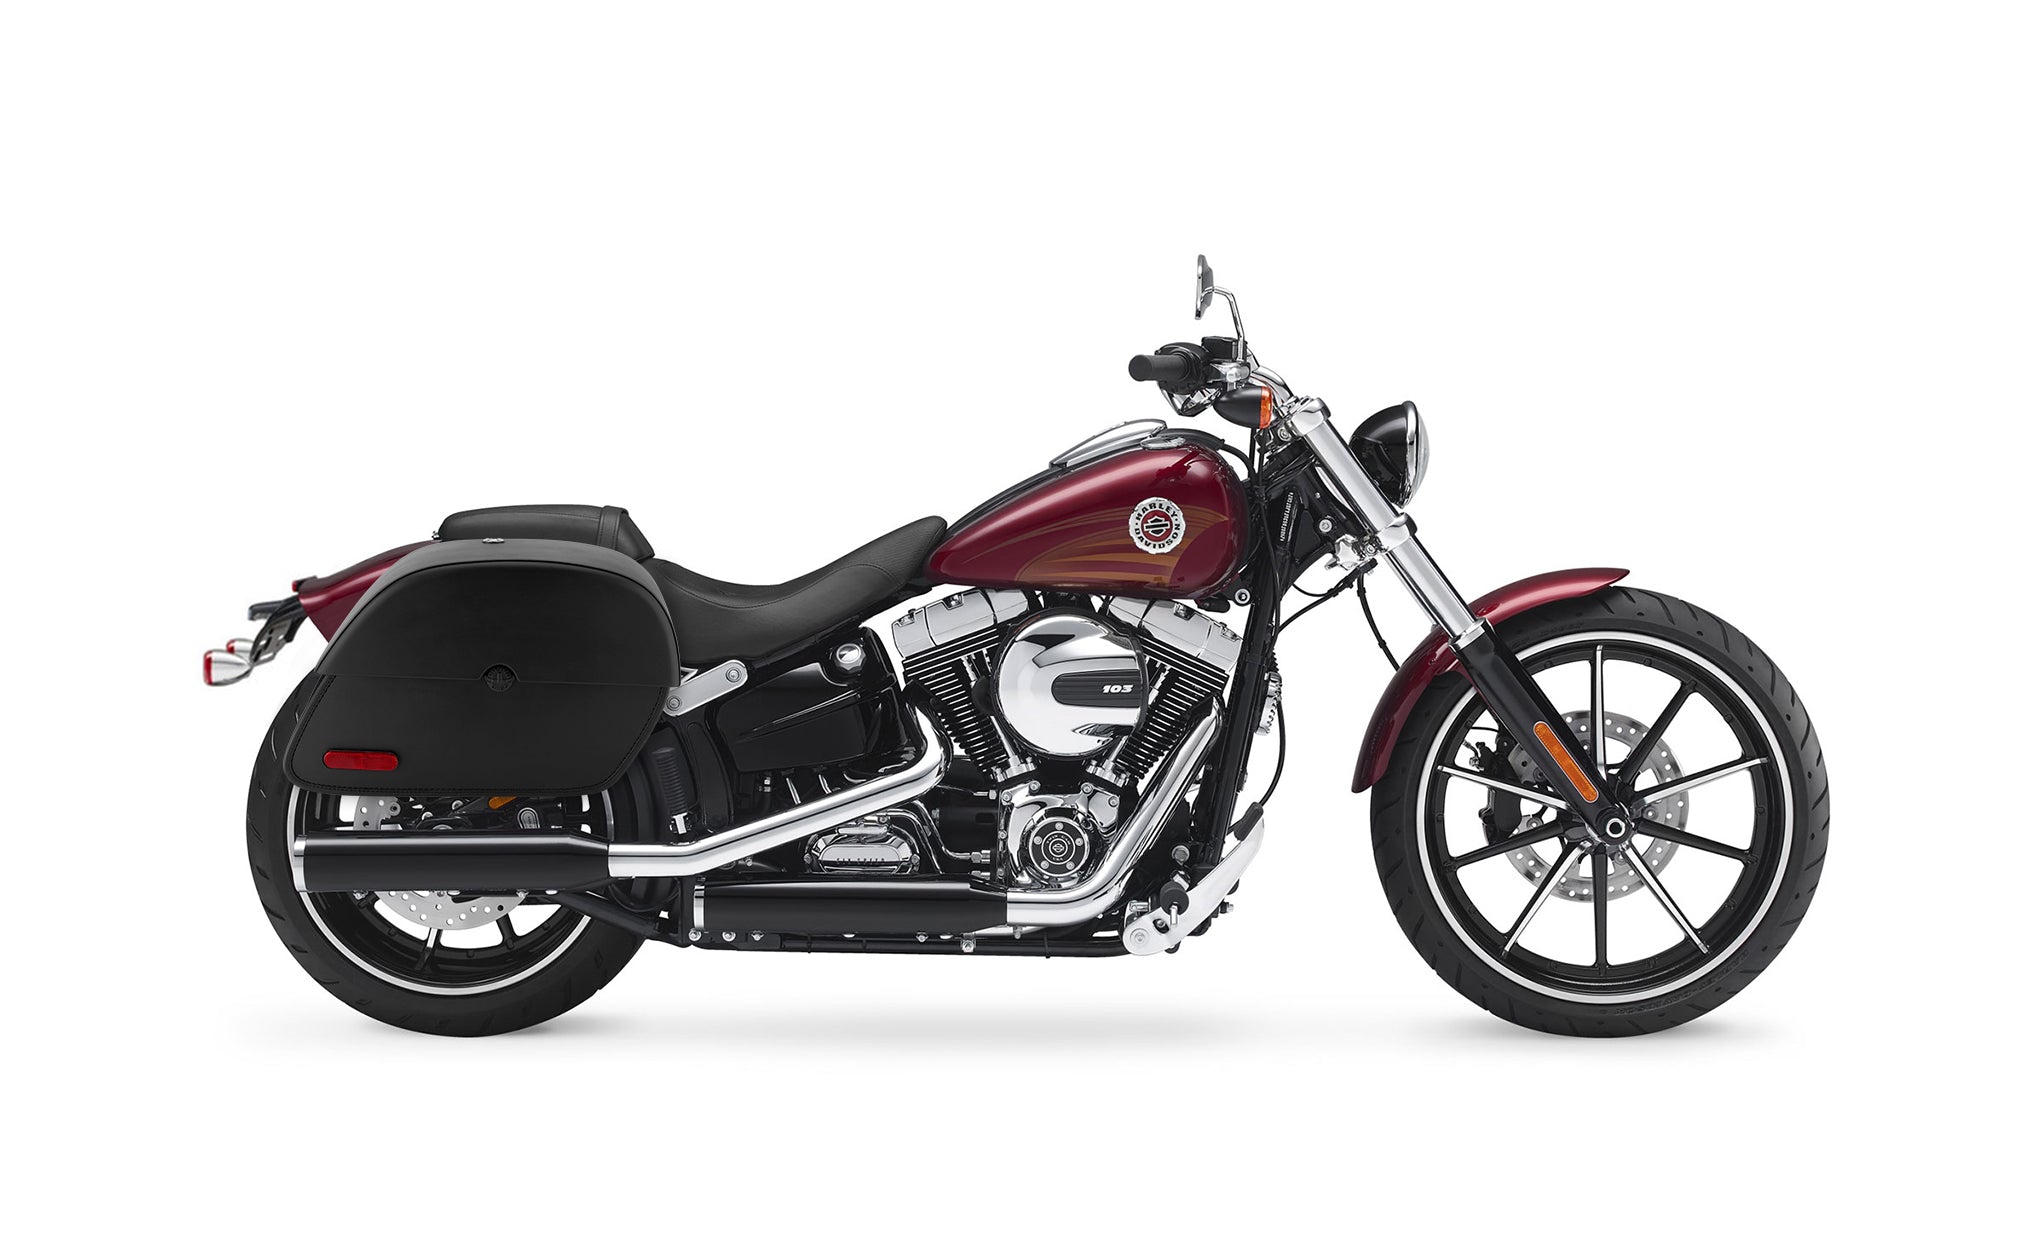 Viking Panzer Large Leather Motorcycle Saddlebags For Harley Davidson Softail Breakout Fxsb on Bike Photo @expand